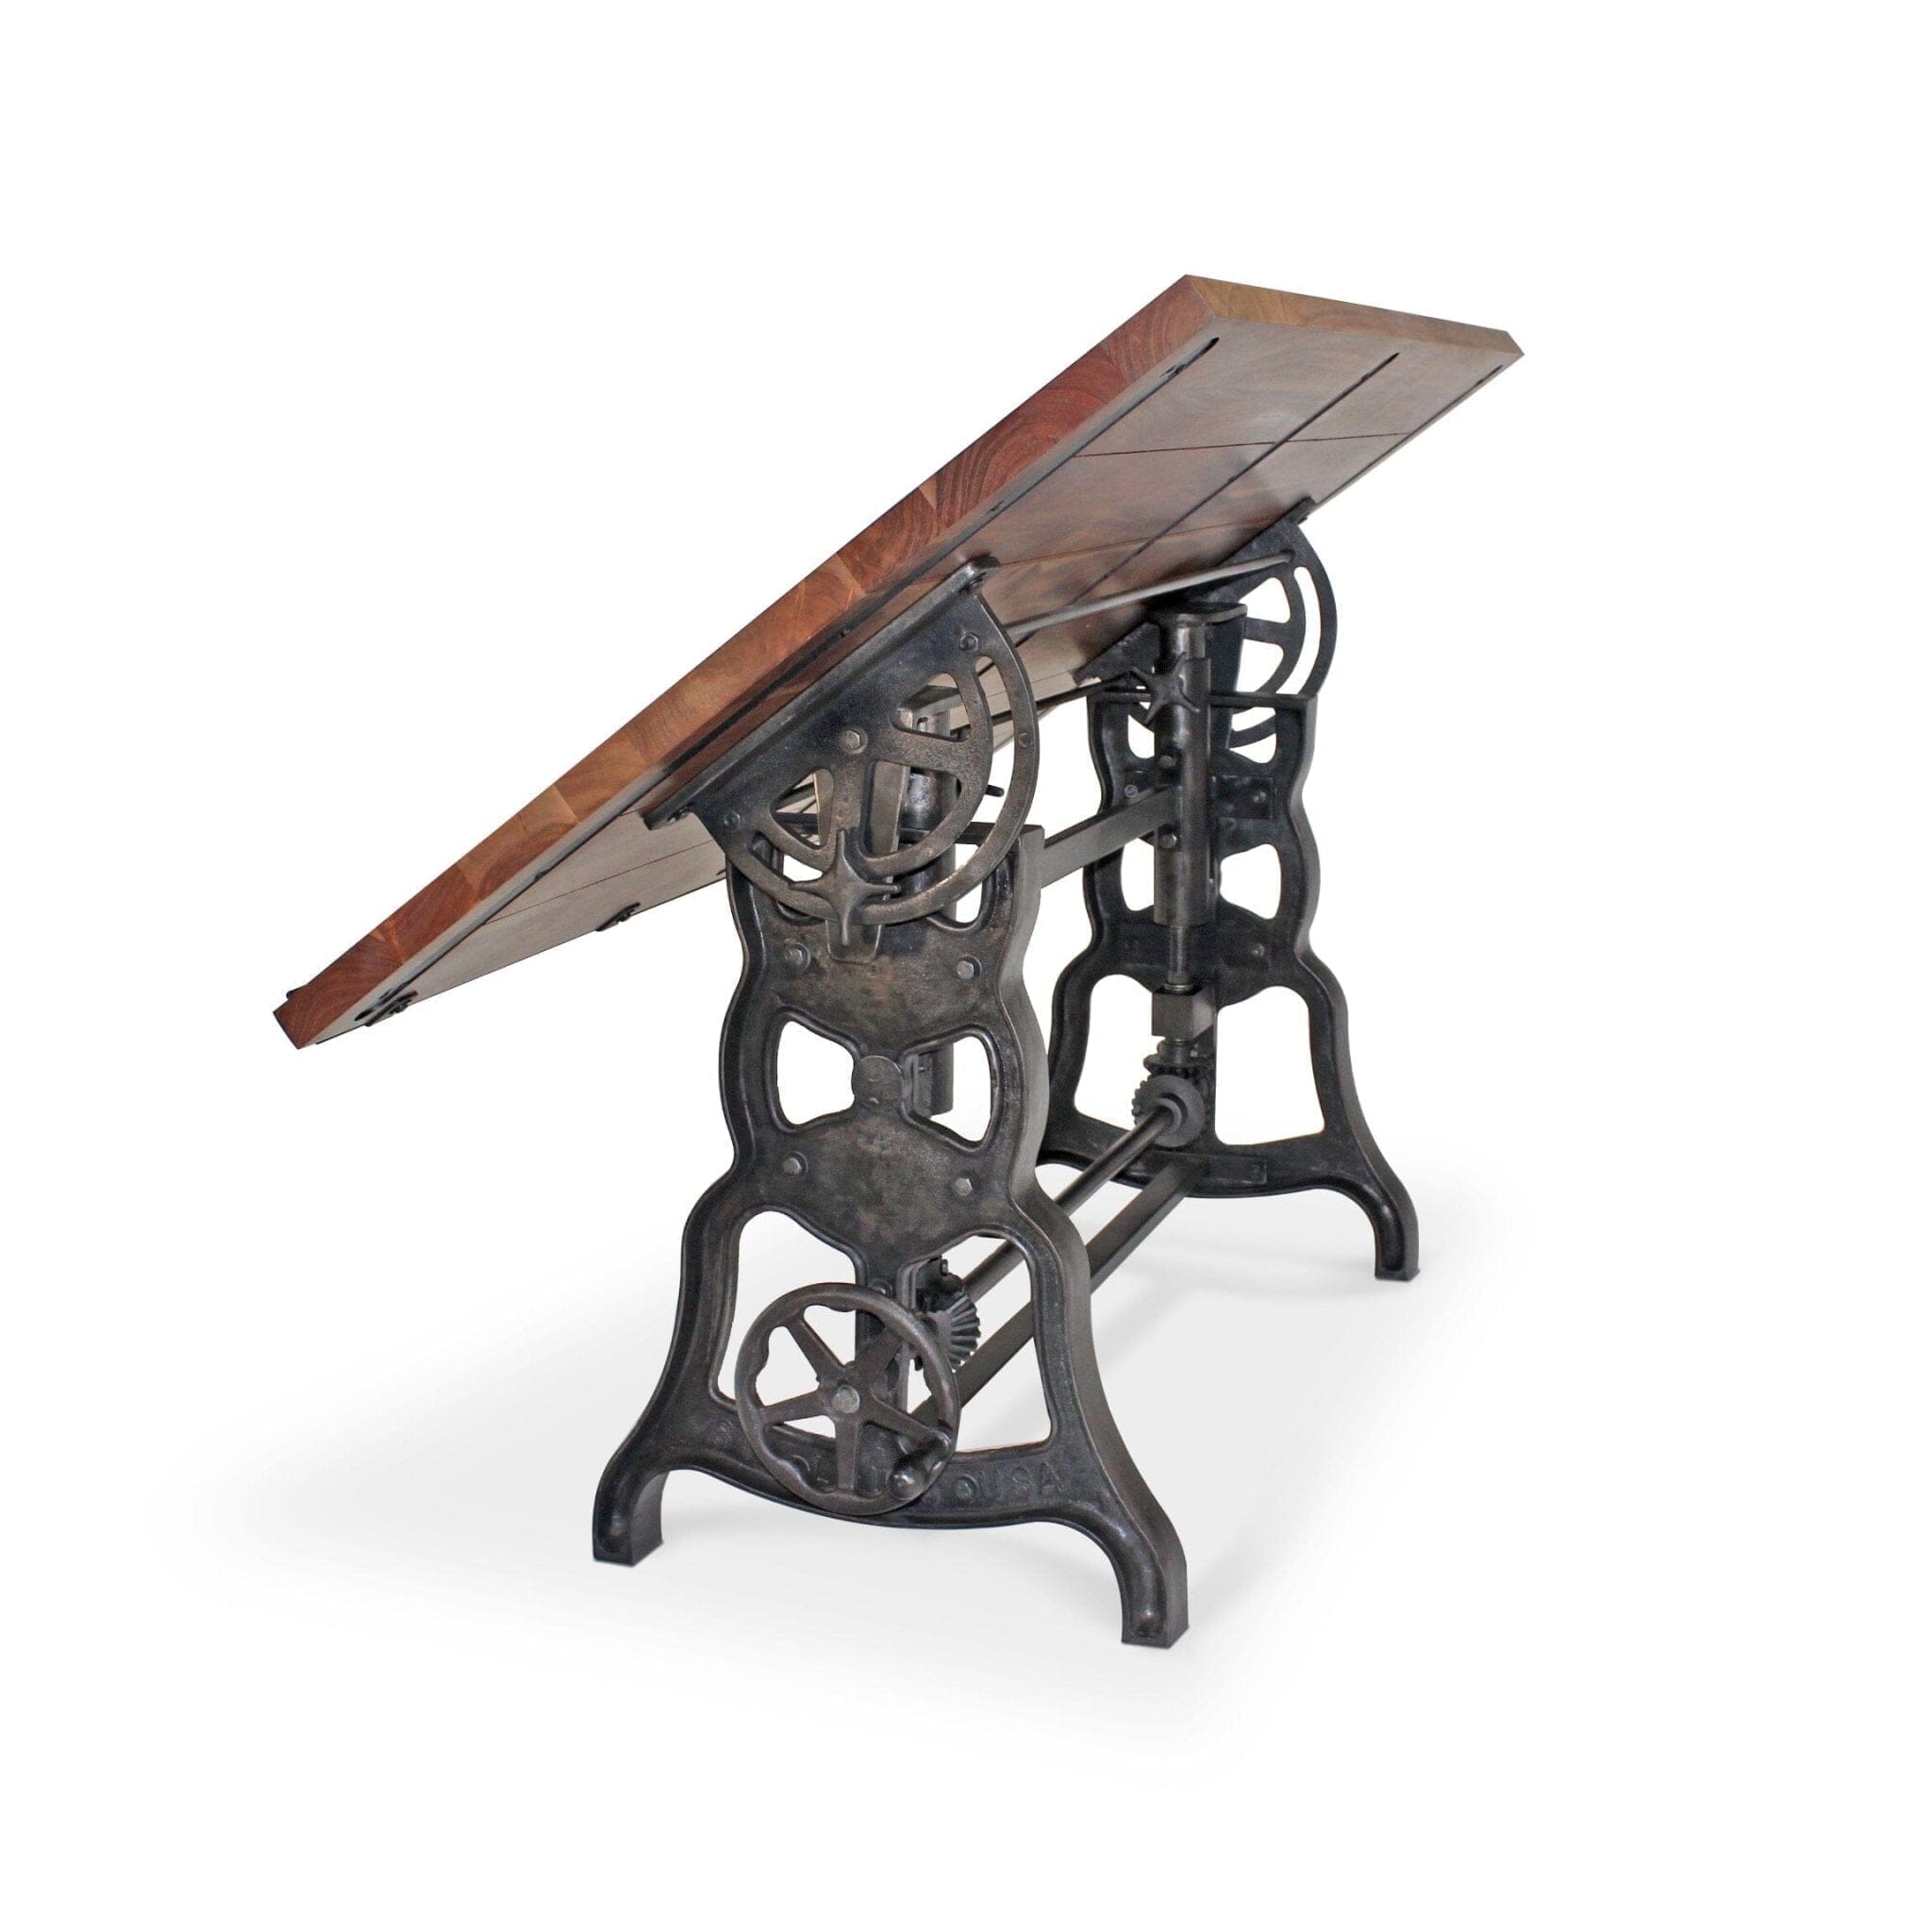 Shoemaker Drafting Table Desk - Adjustable Height Iron Base - Tilt Top